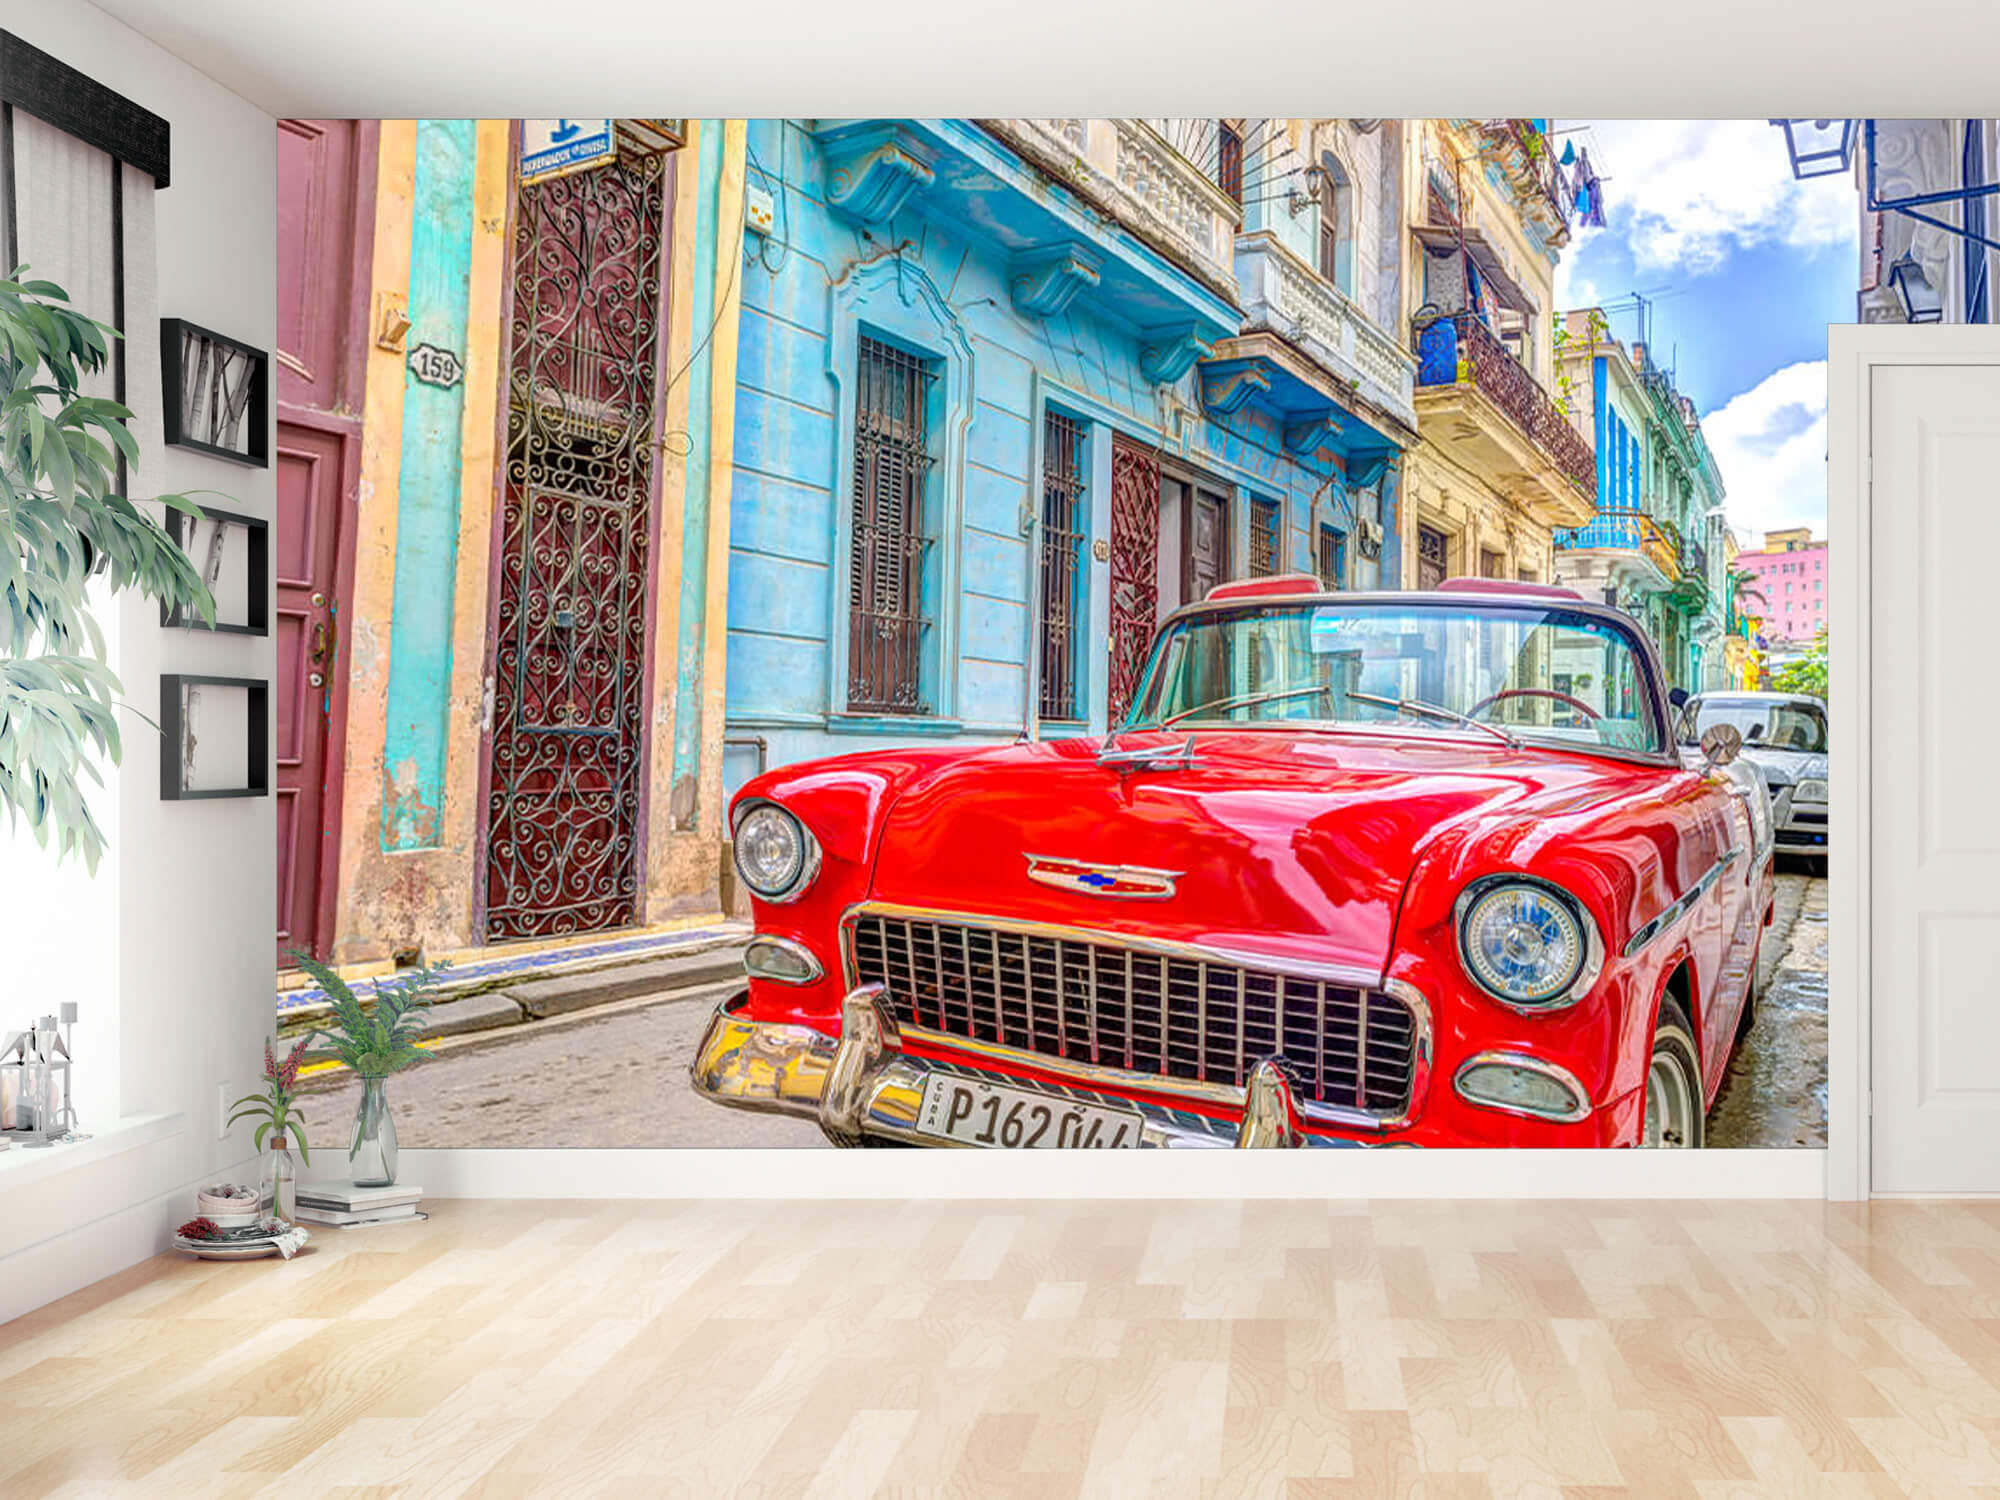  Vintage auto in Havana 1